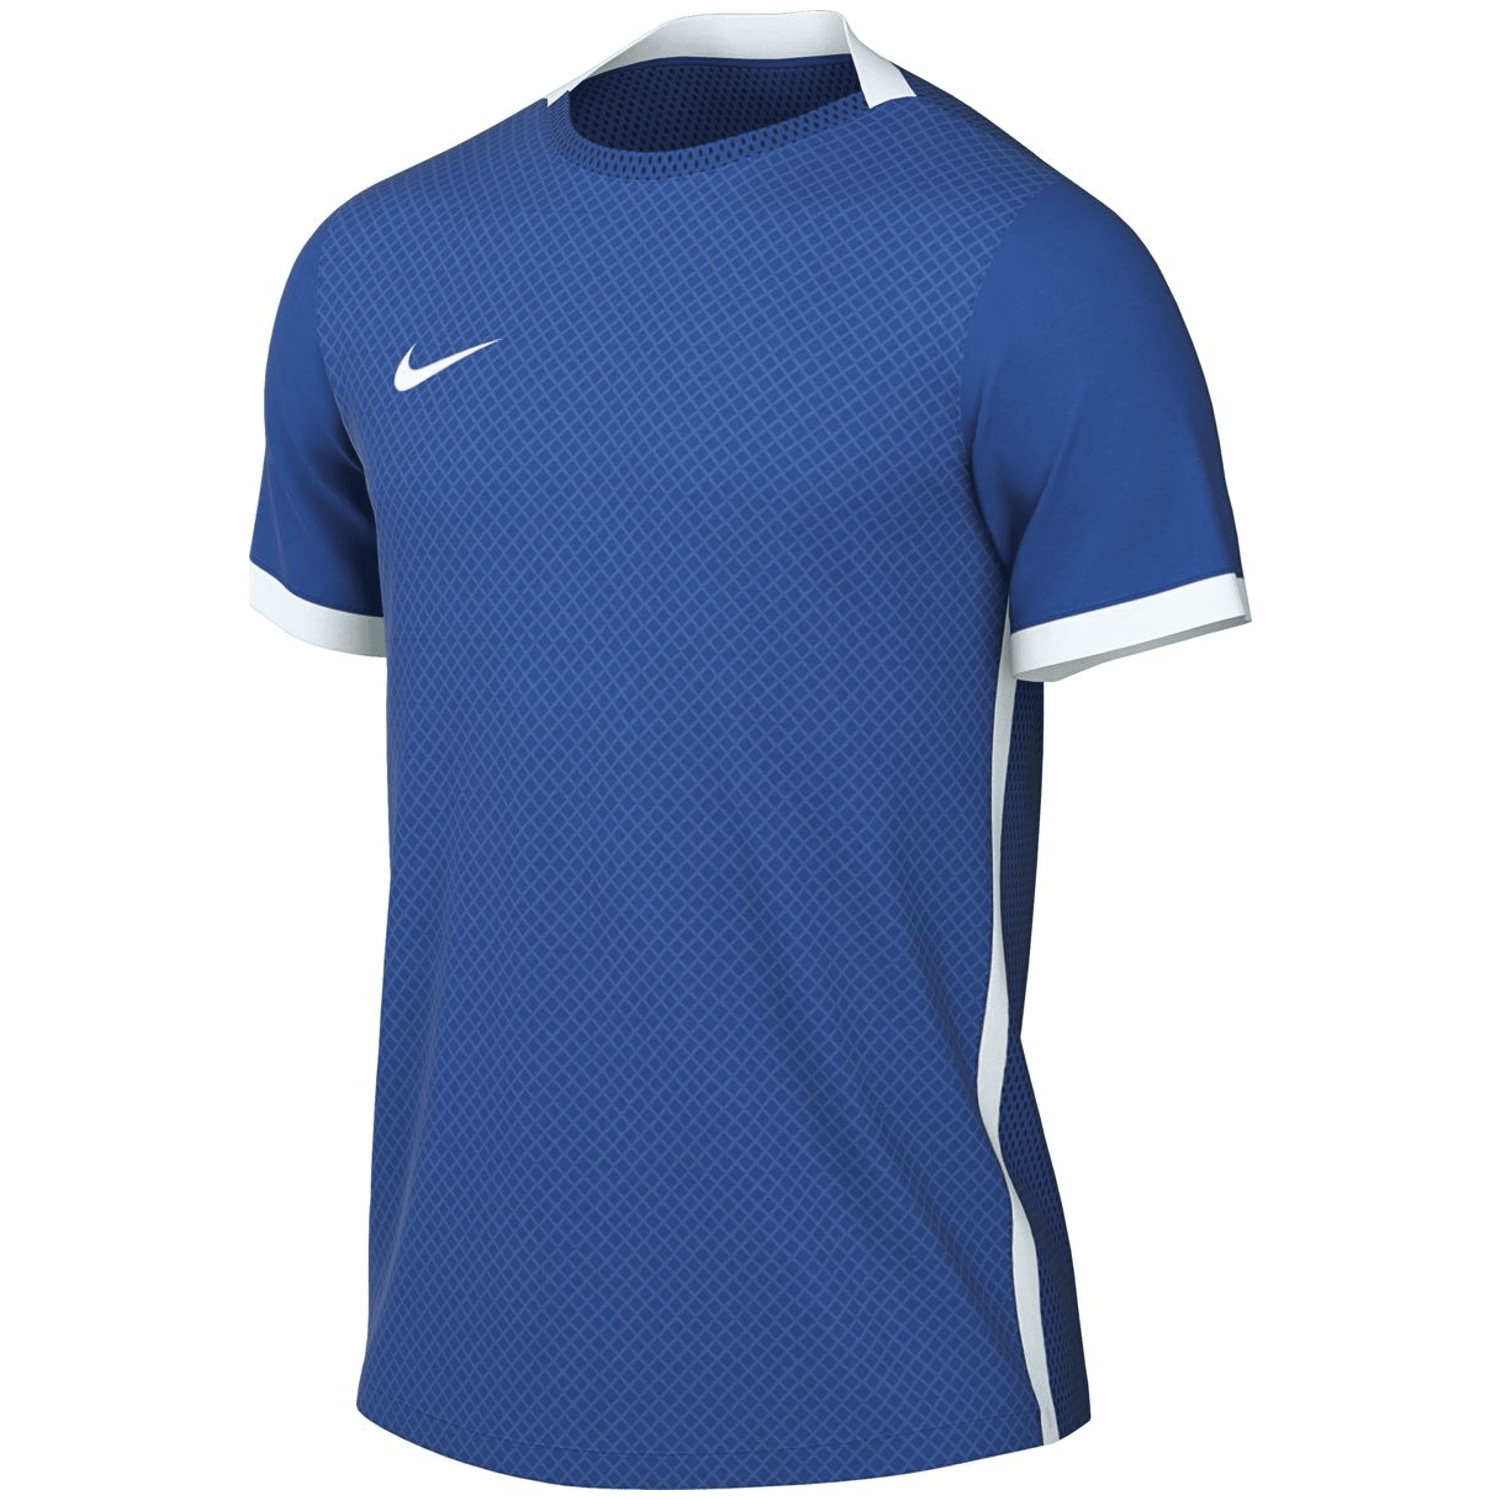 Nike Dri-FIT Challenge 4 Herren Trikot